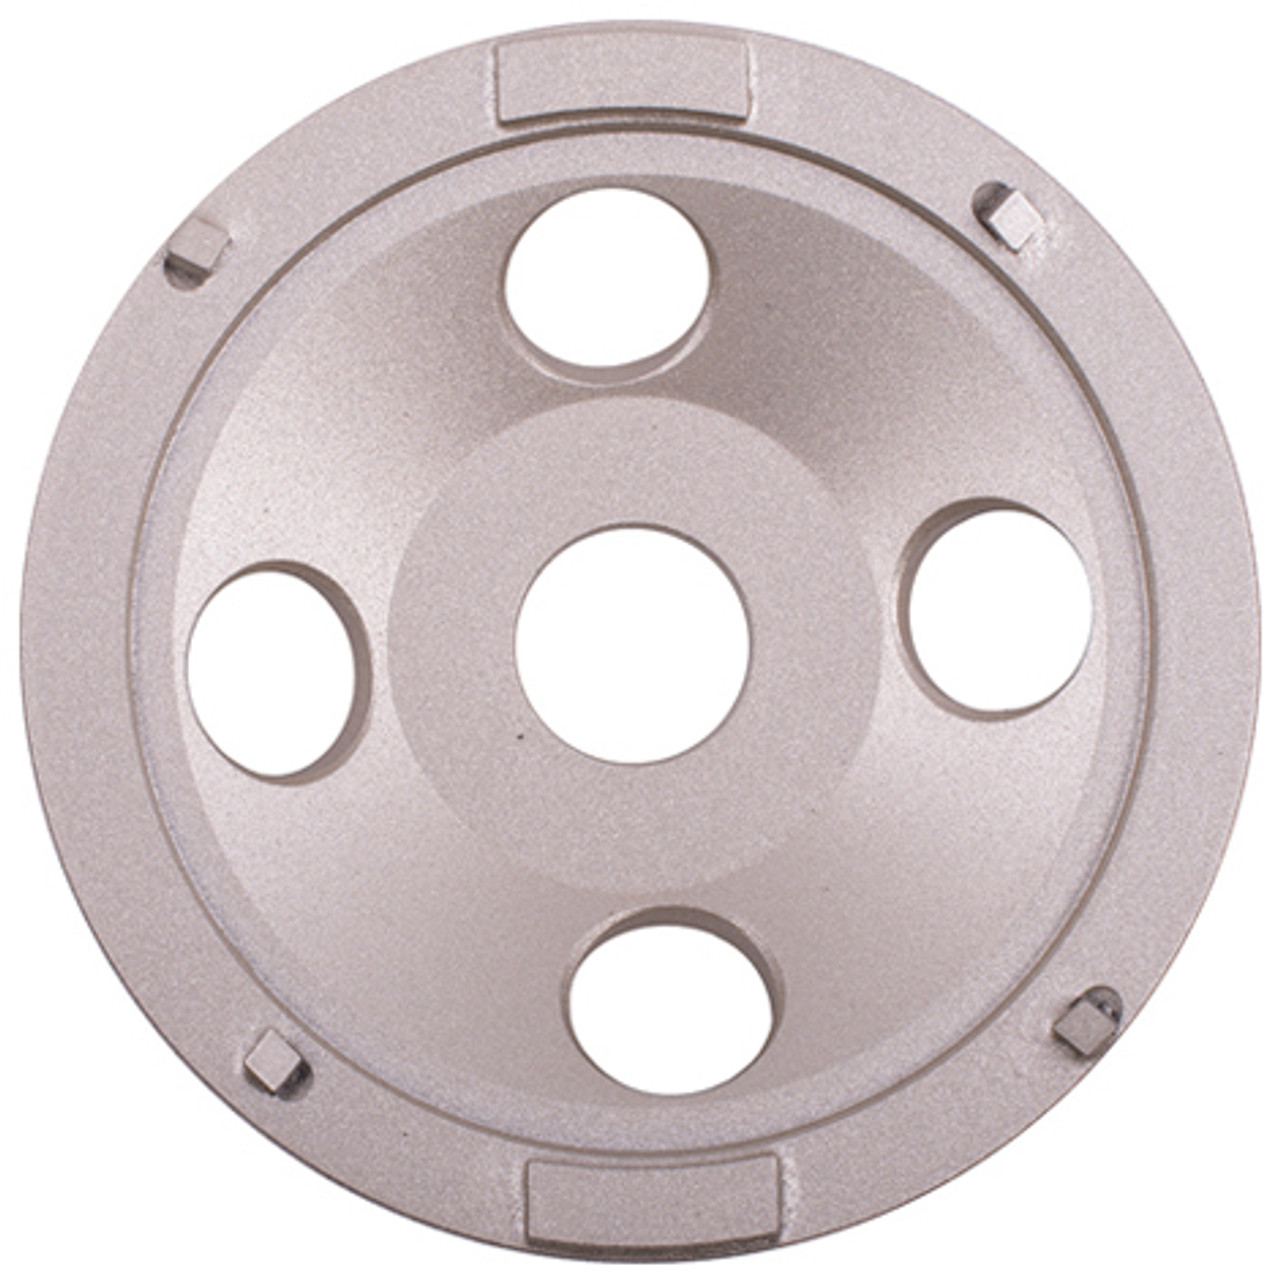 Diamond Vantage  5 x 5/8-11 inch PCD Cup Wheels w/ Protective Segment